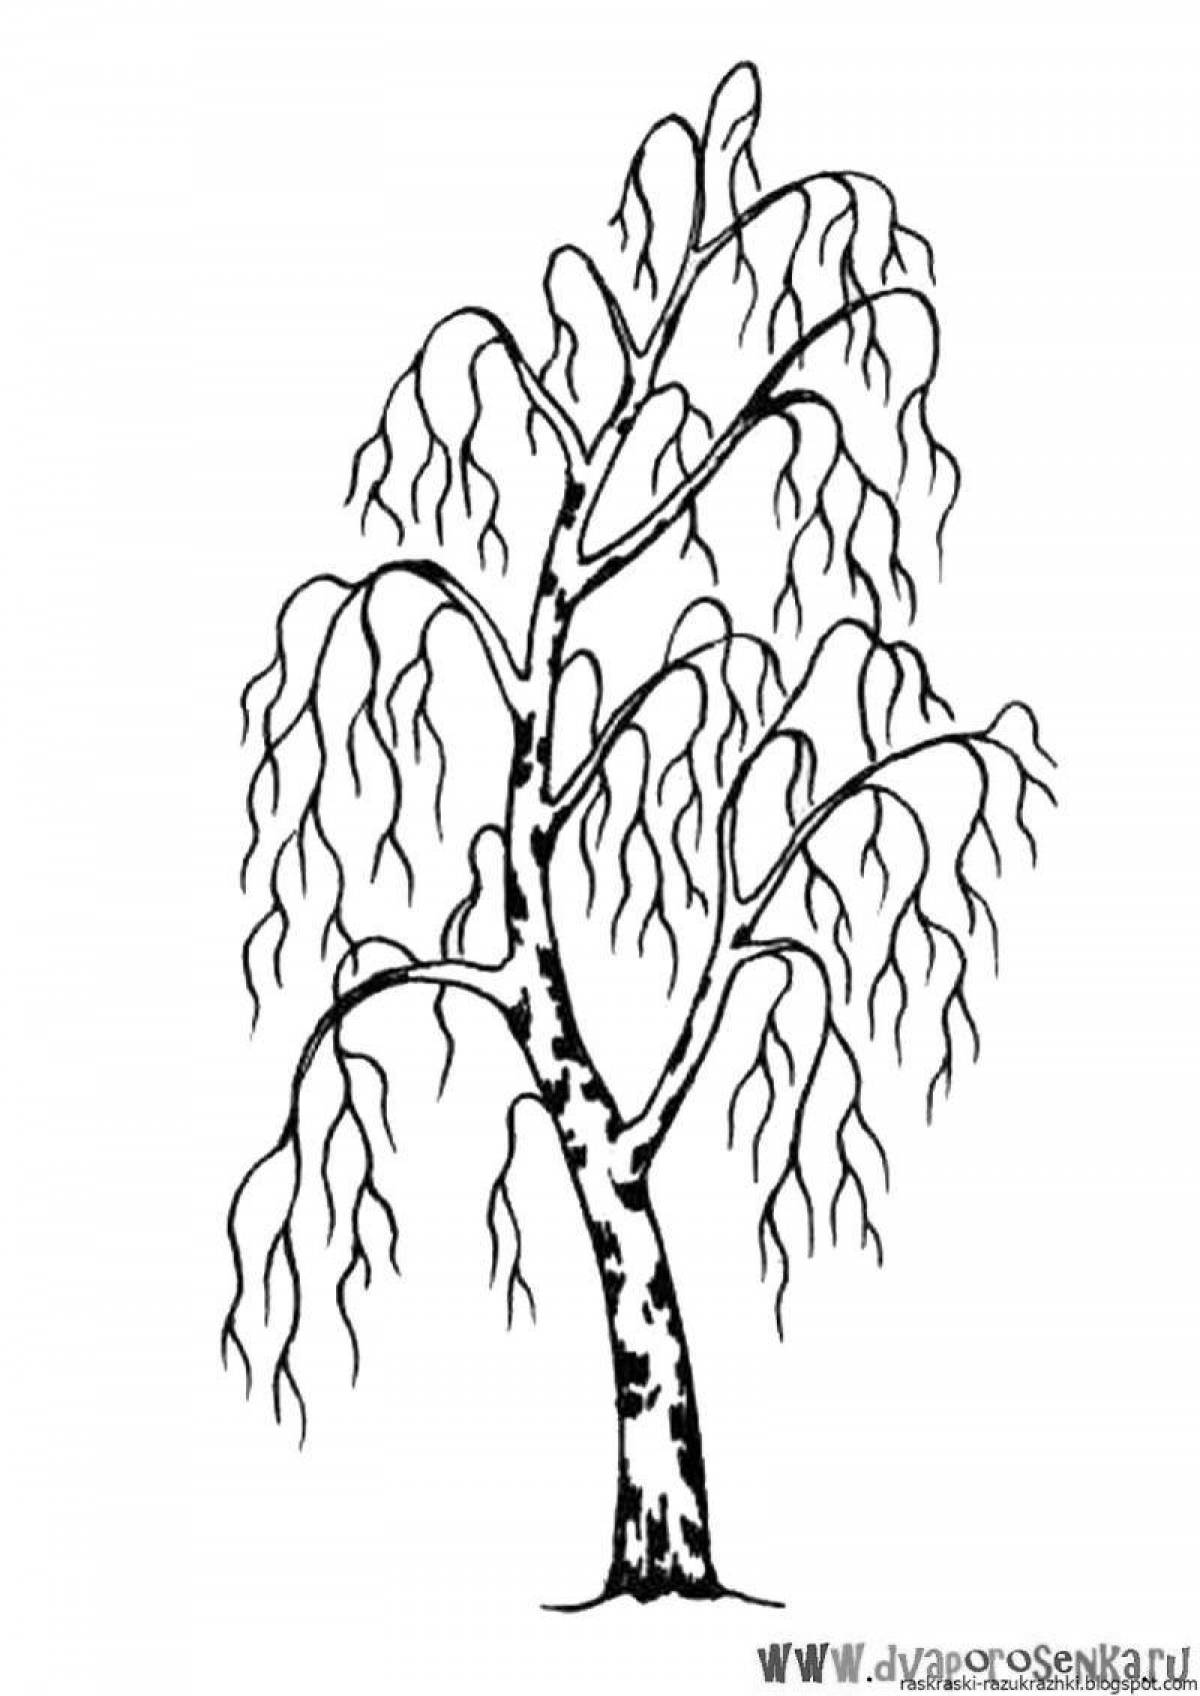 Coloring book beckoning winter birch